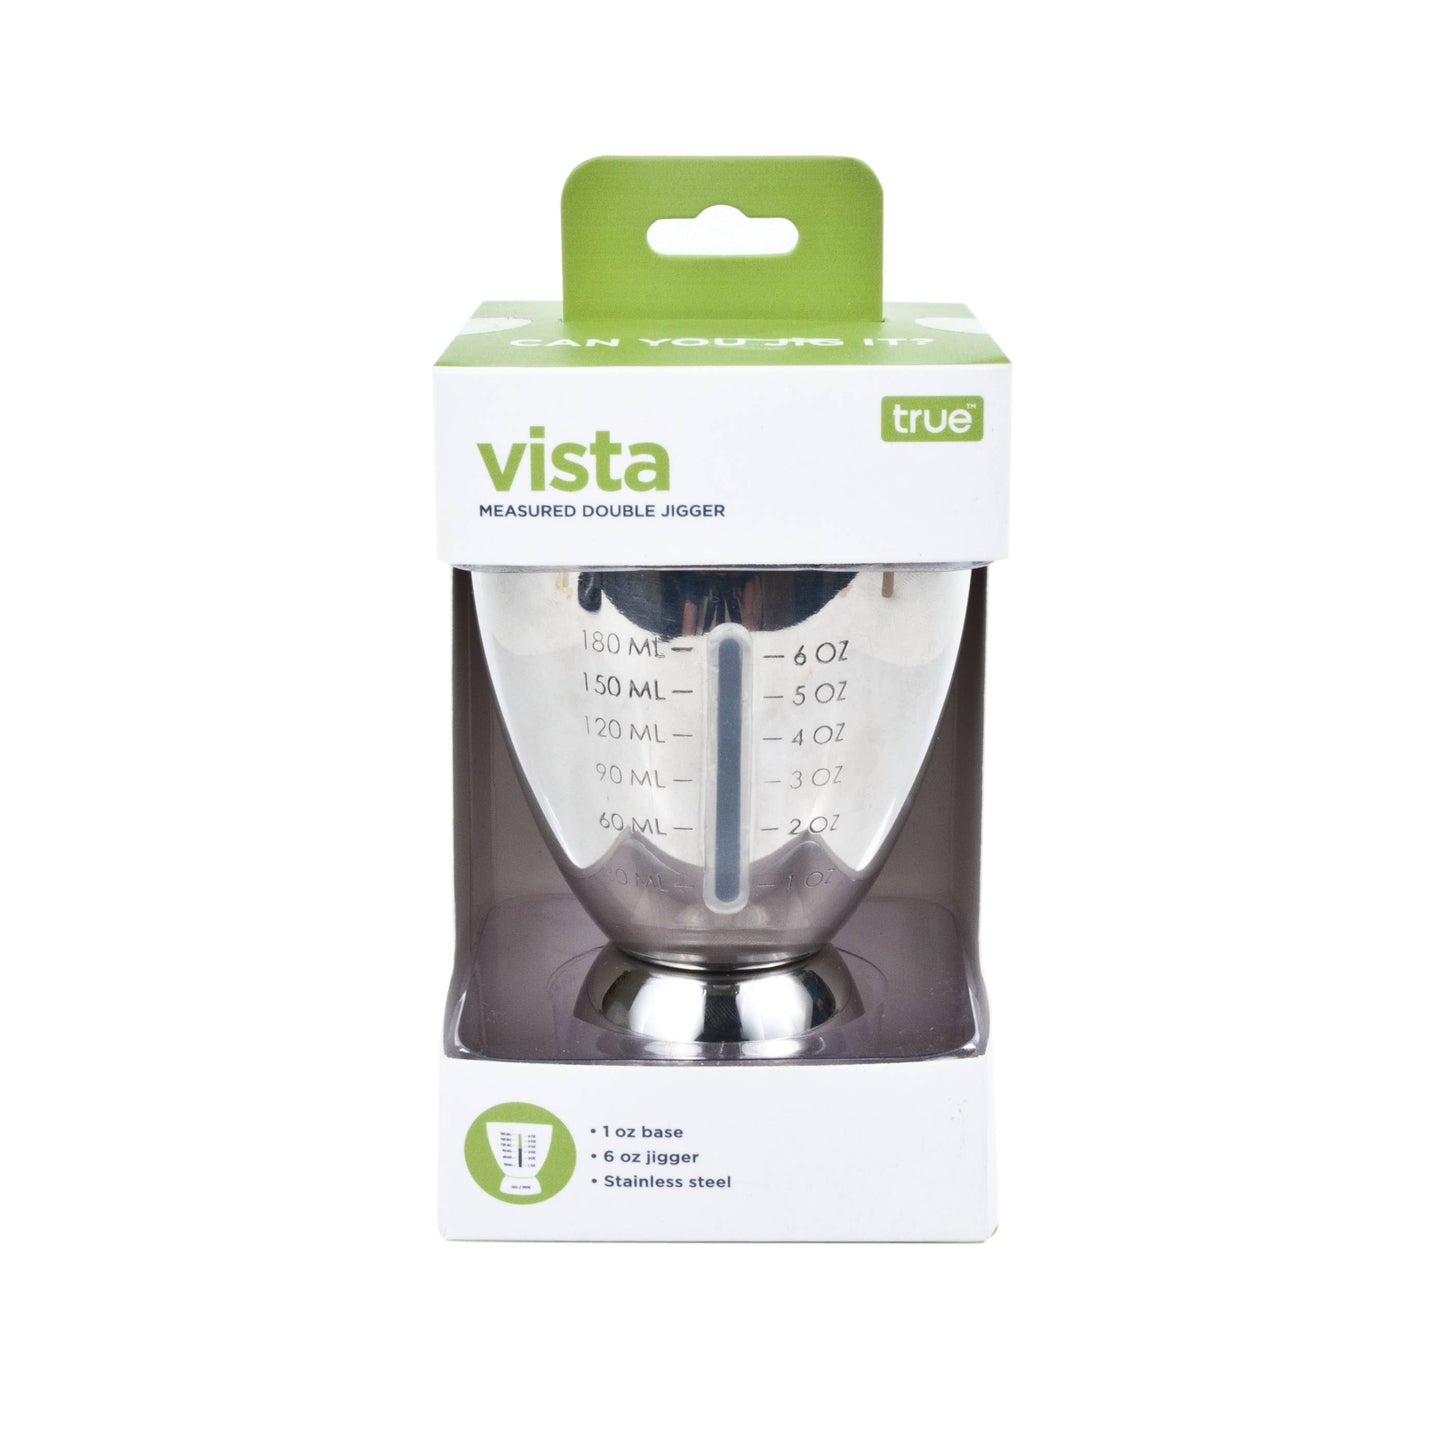 Vista™: Measured Double Jigger